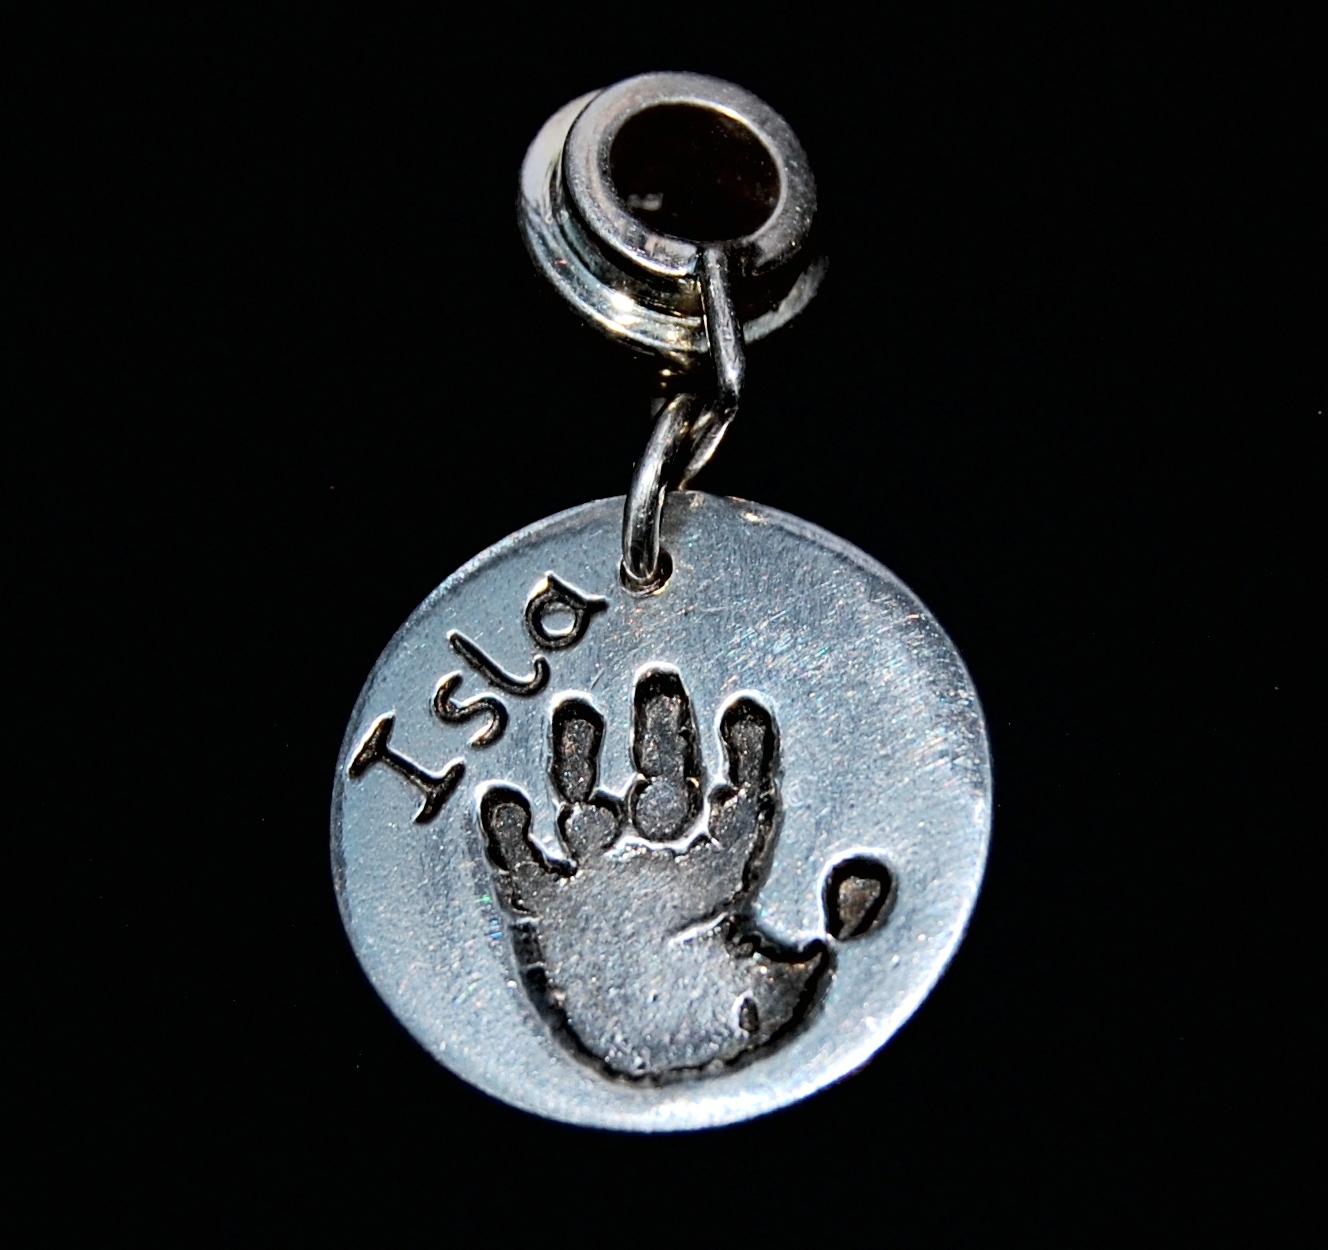 Regular silver circle handprint charm presented on a charm carrier.